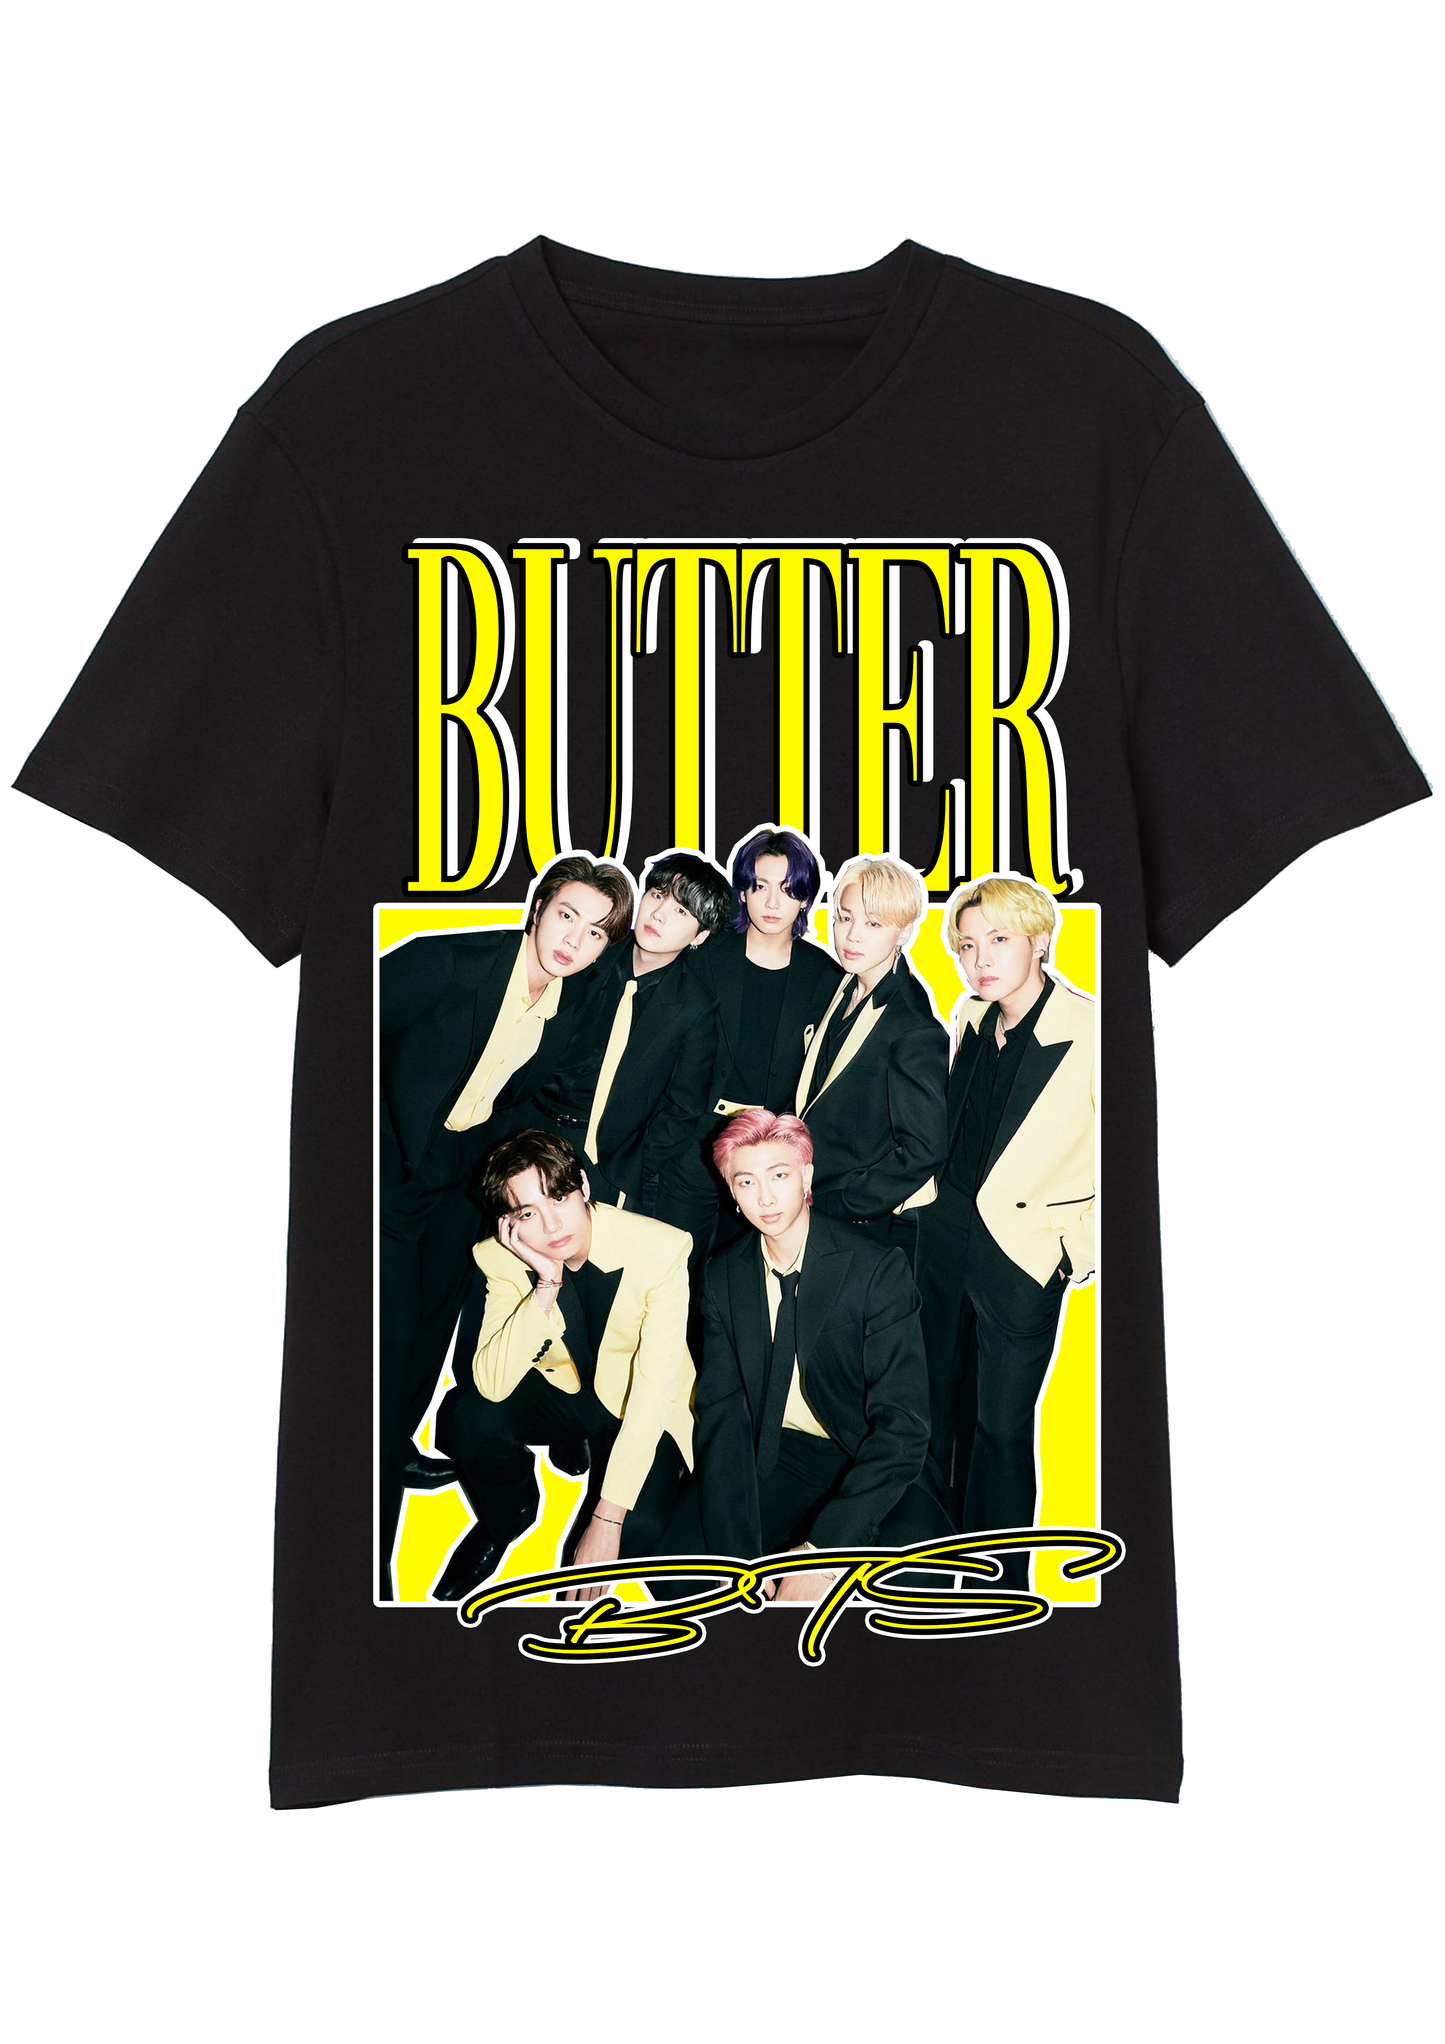 BTS 'Butter' Inspired Vintage T-Shirt